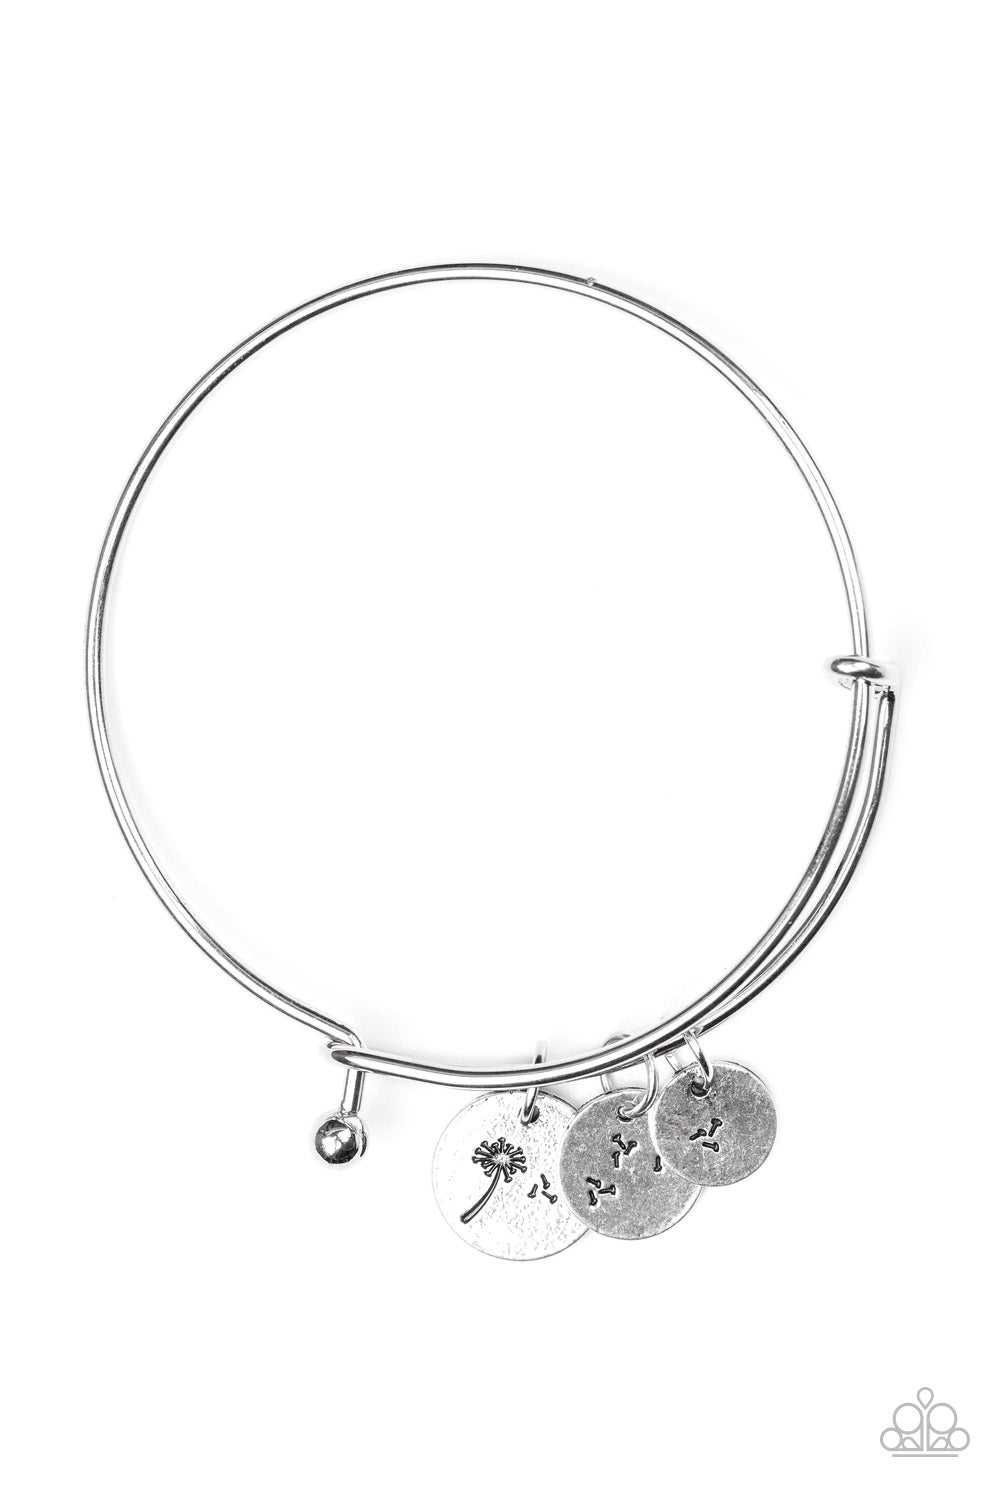 Paparazzi Accessories - Dreamy Dandelions - Silver Bracelet